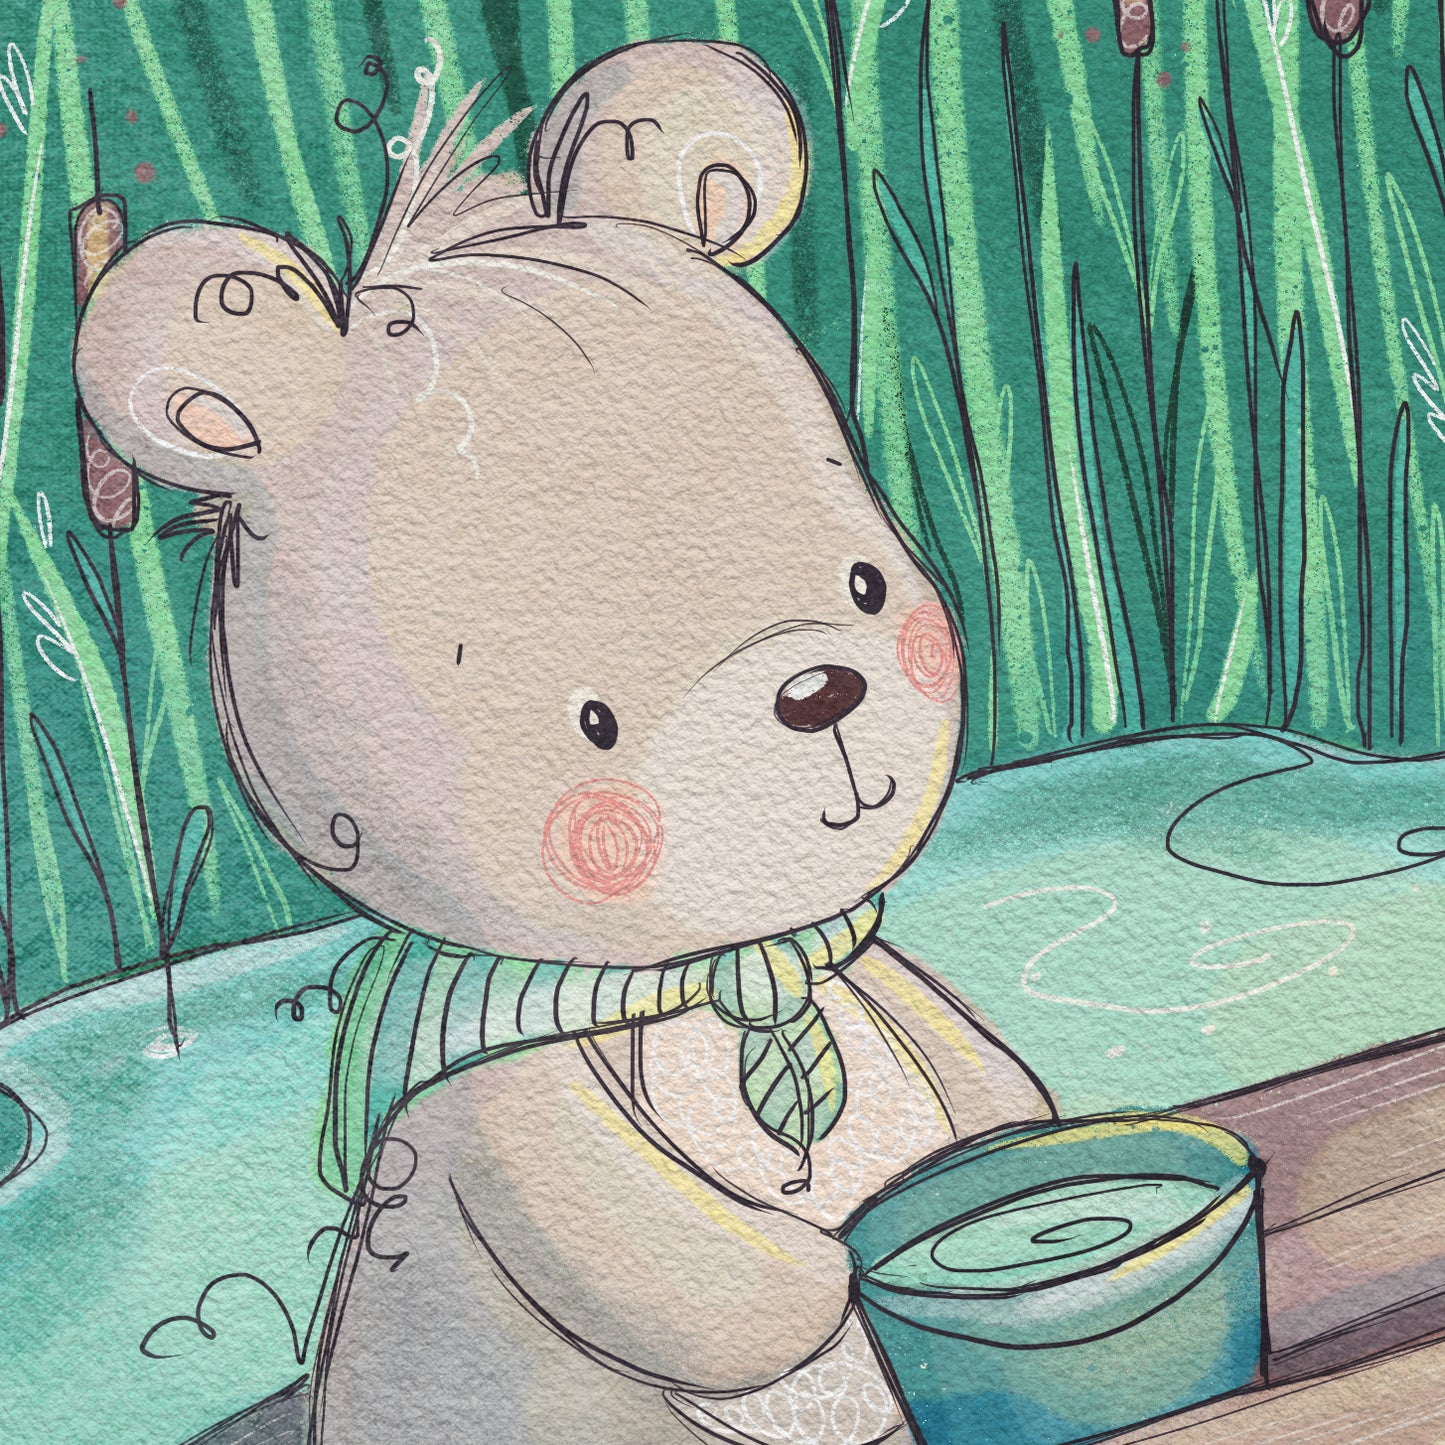 'Fishing with Bear' Children's Wall Art Print